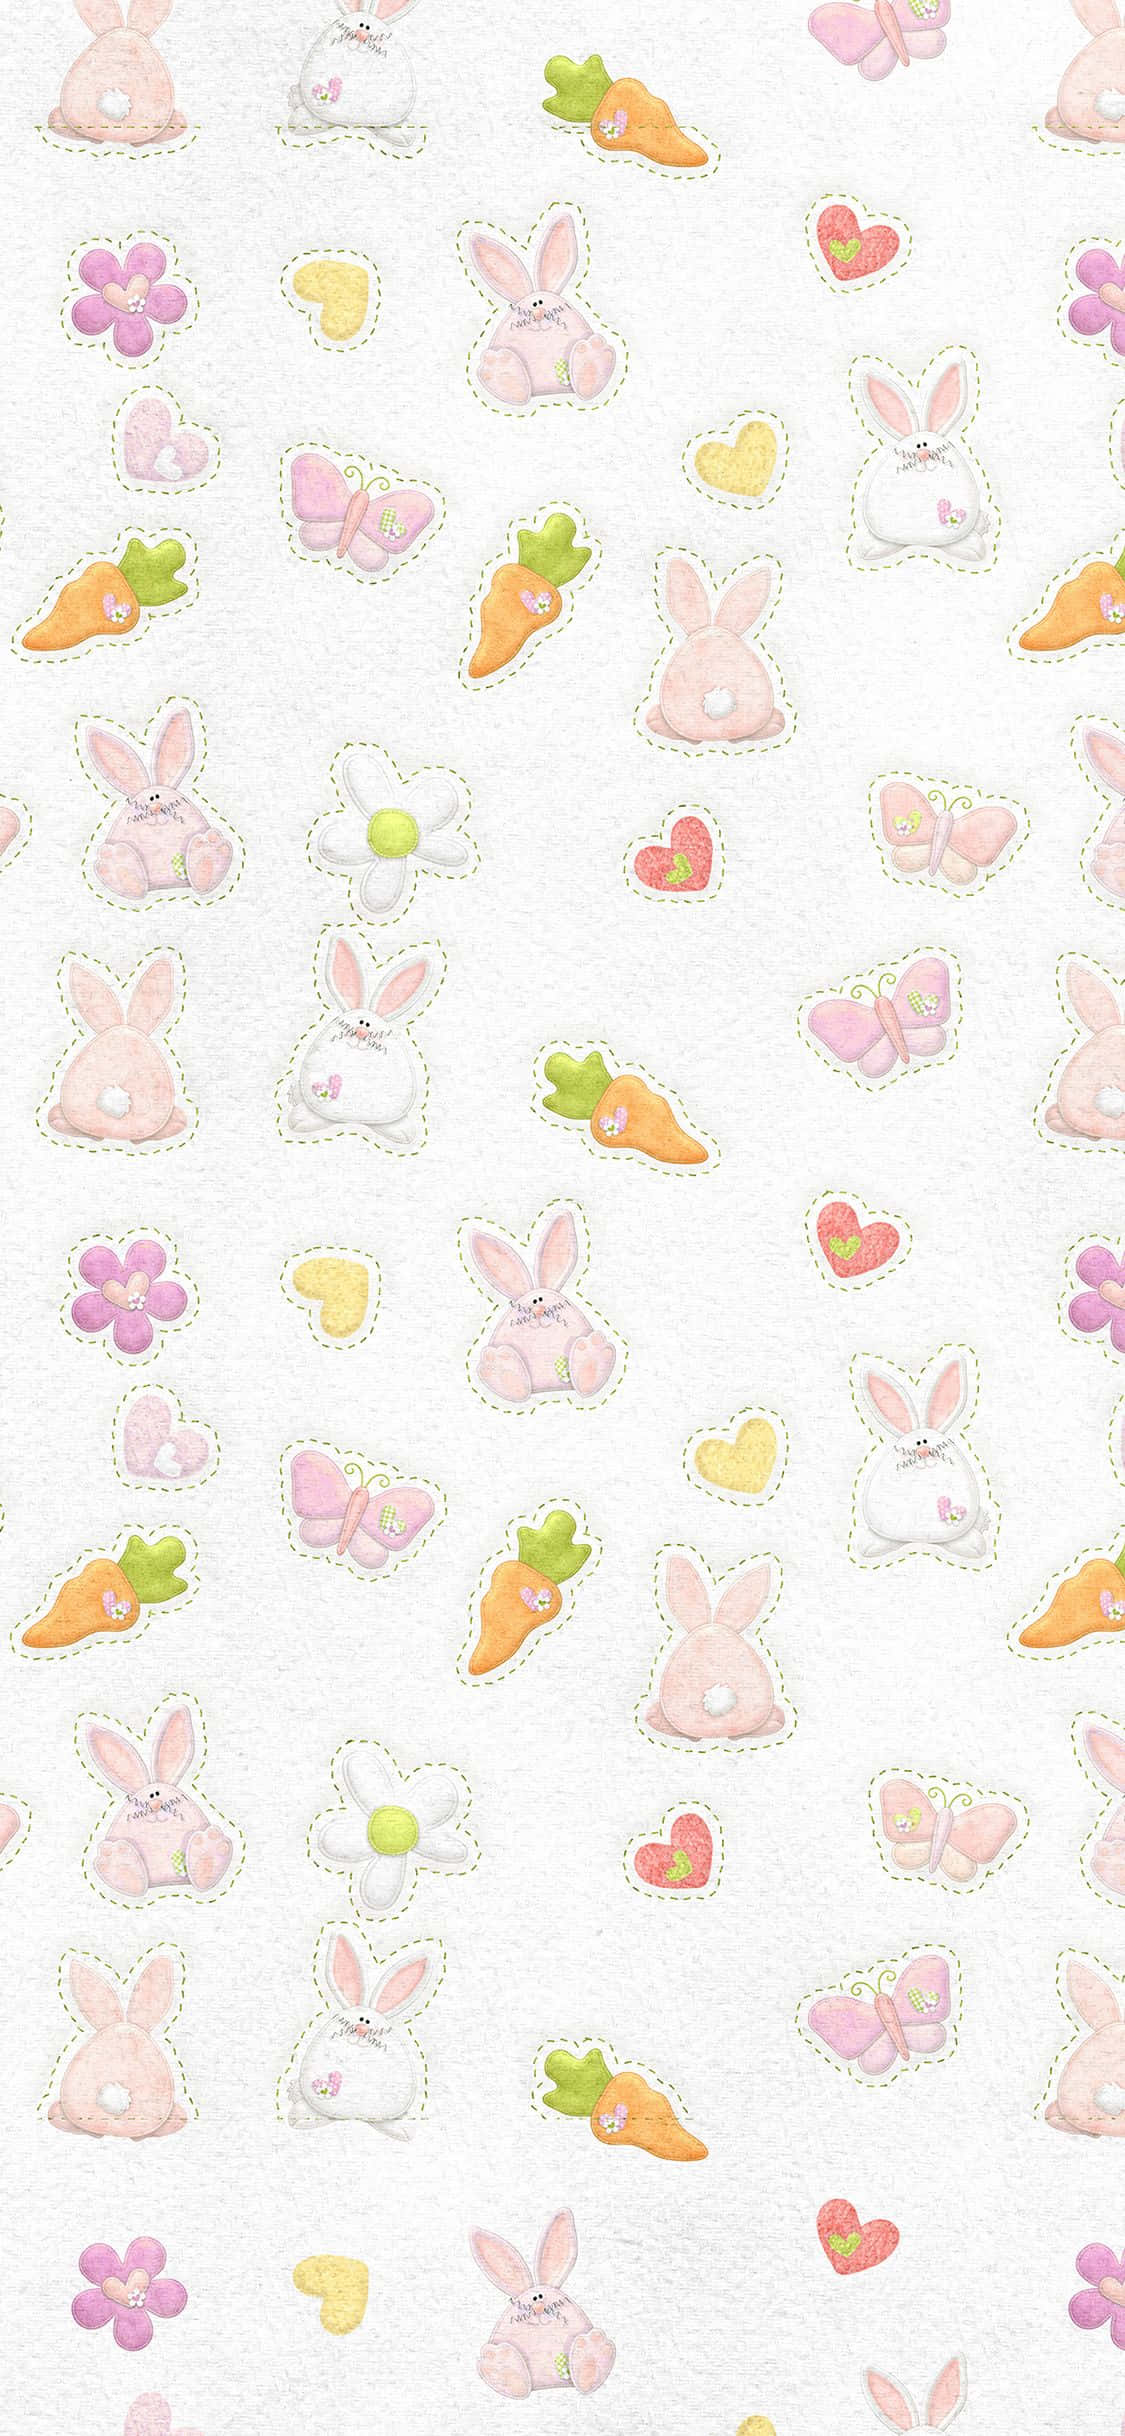 A Cute Pink Bunny Sitting in a Garden Wallpaper